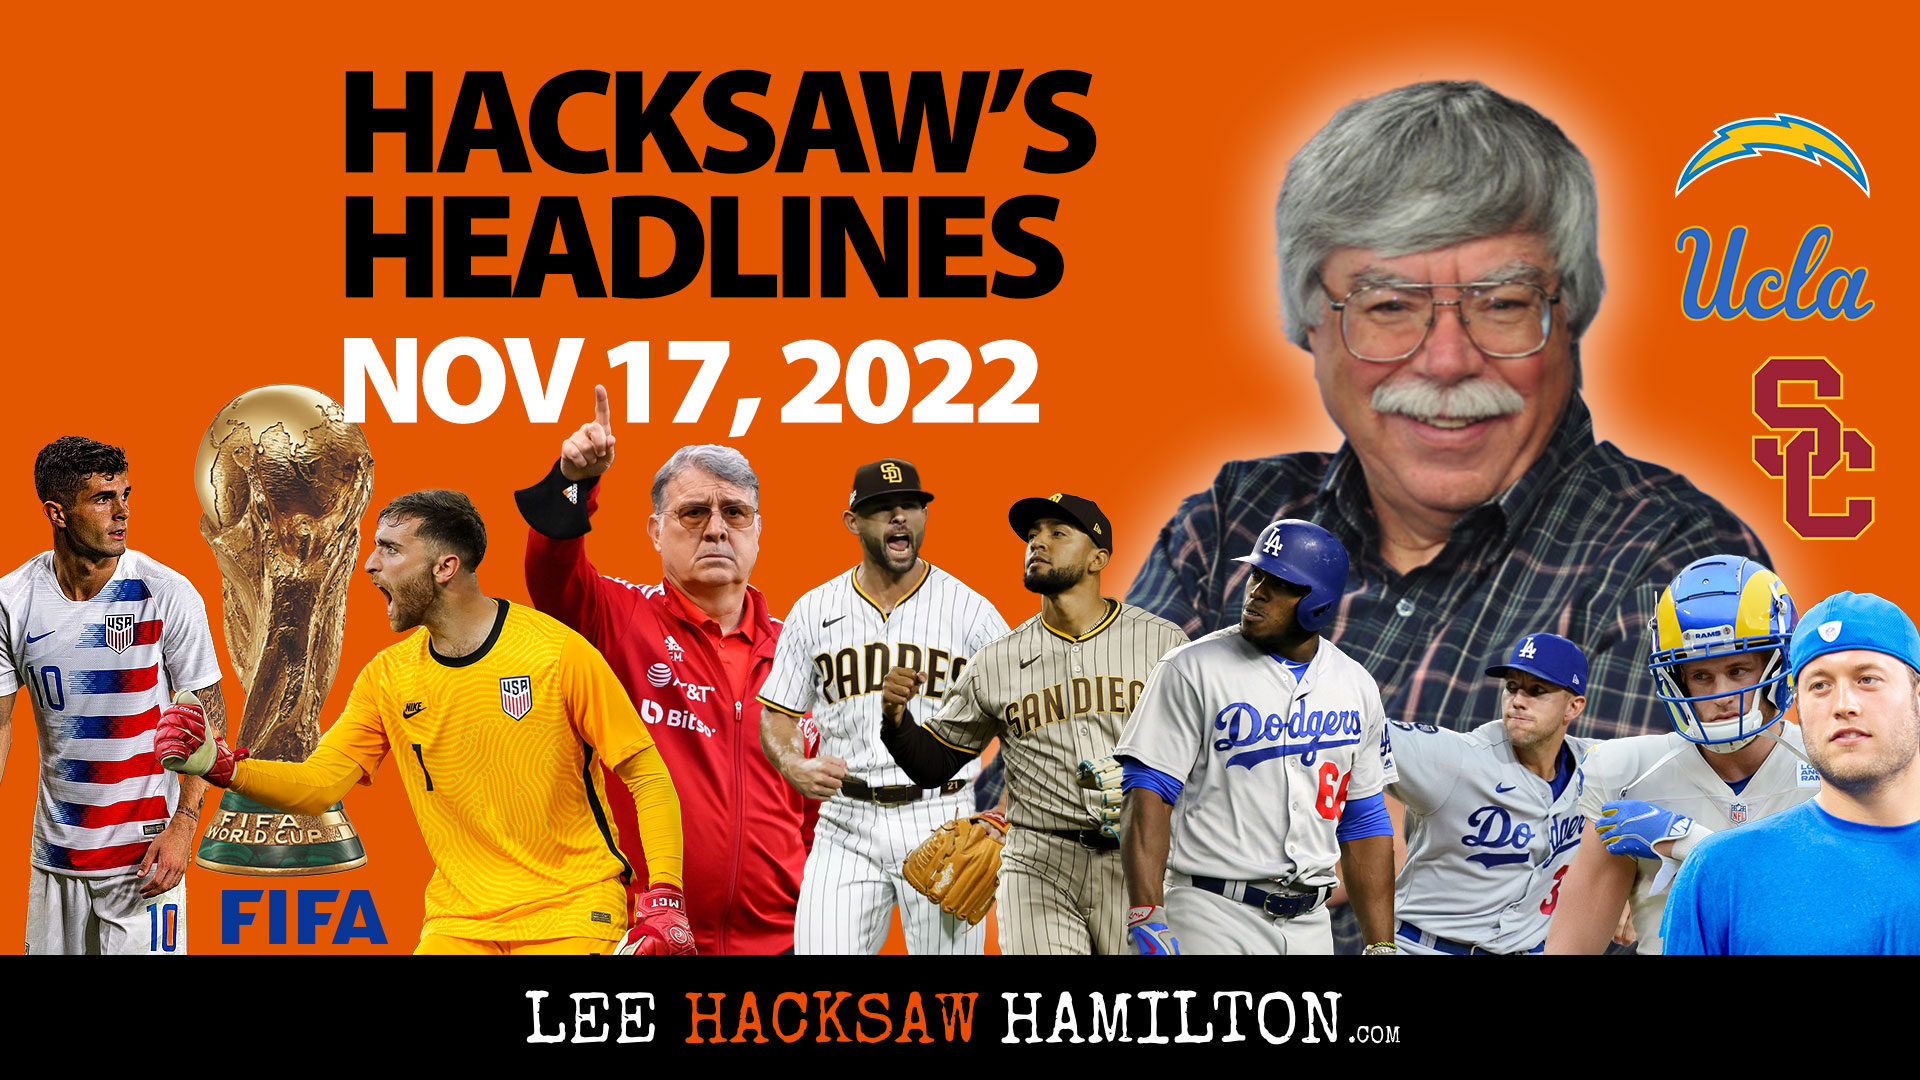 World Cup Preview, MLB Free Agency, Lee Hacksaw Hamilton